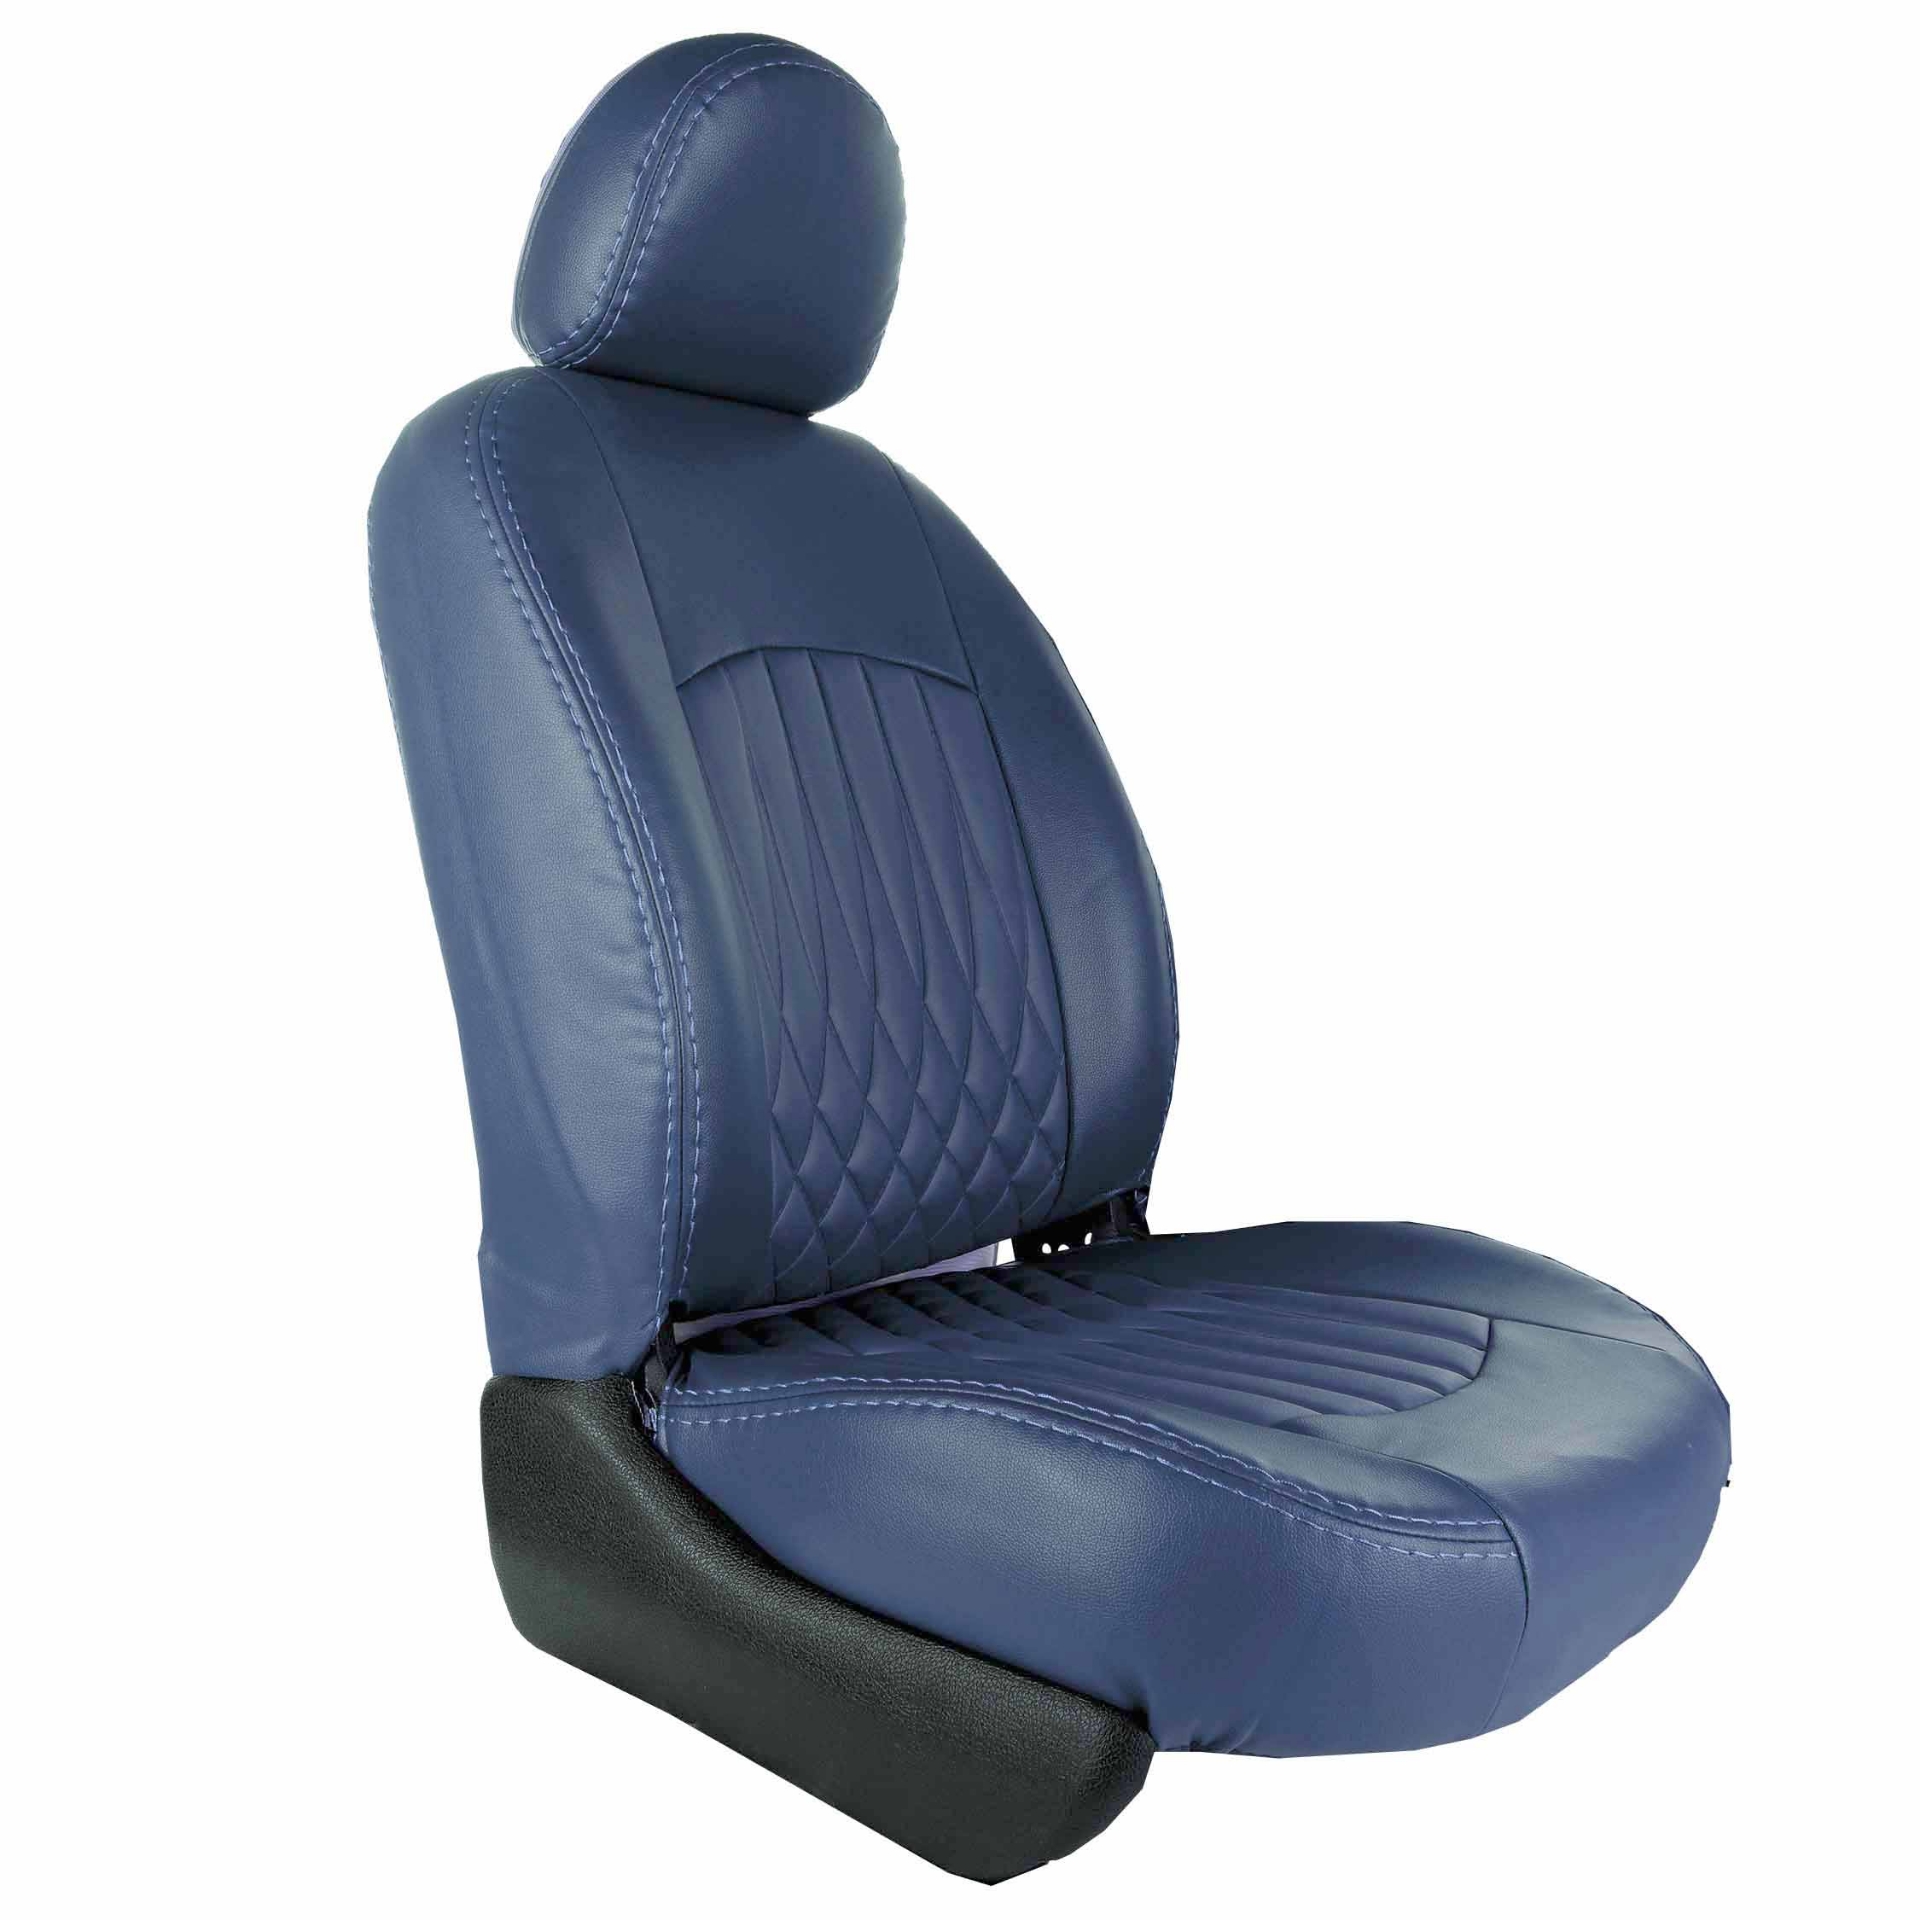 تصویر  روکش صندلی 206 چرم مصنوعی طرح بوگاتی جلوه مدل hue